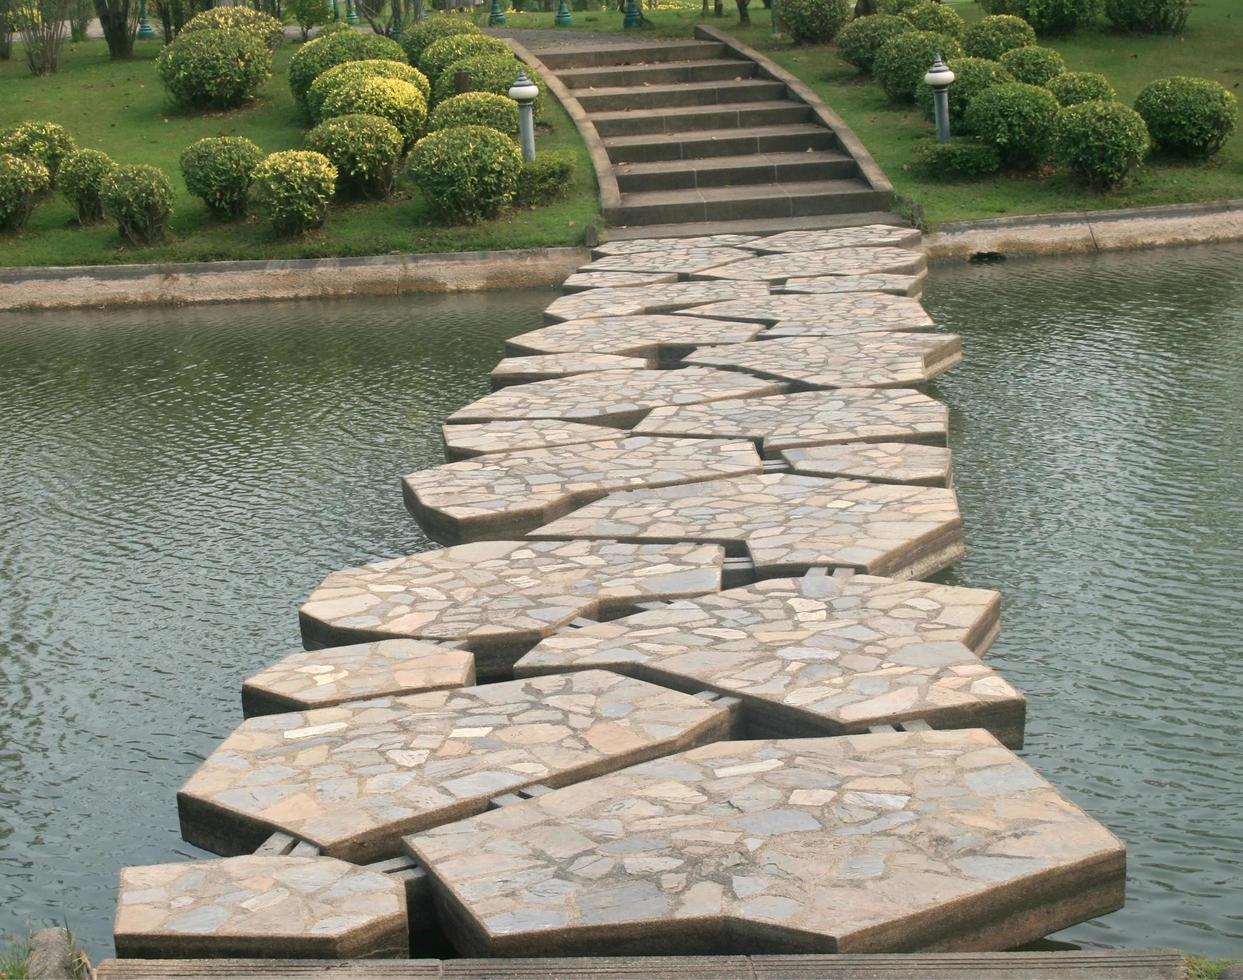 thailandia, 2020 - ponte di pietra nel bellissimo giardino foto